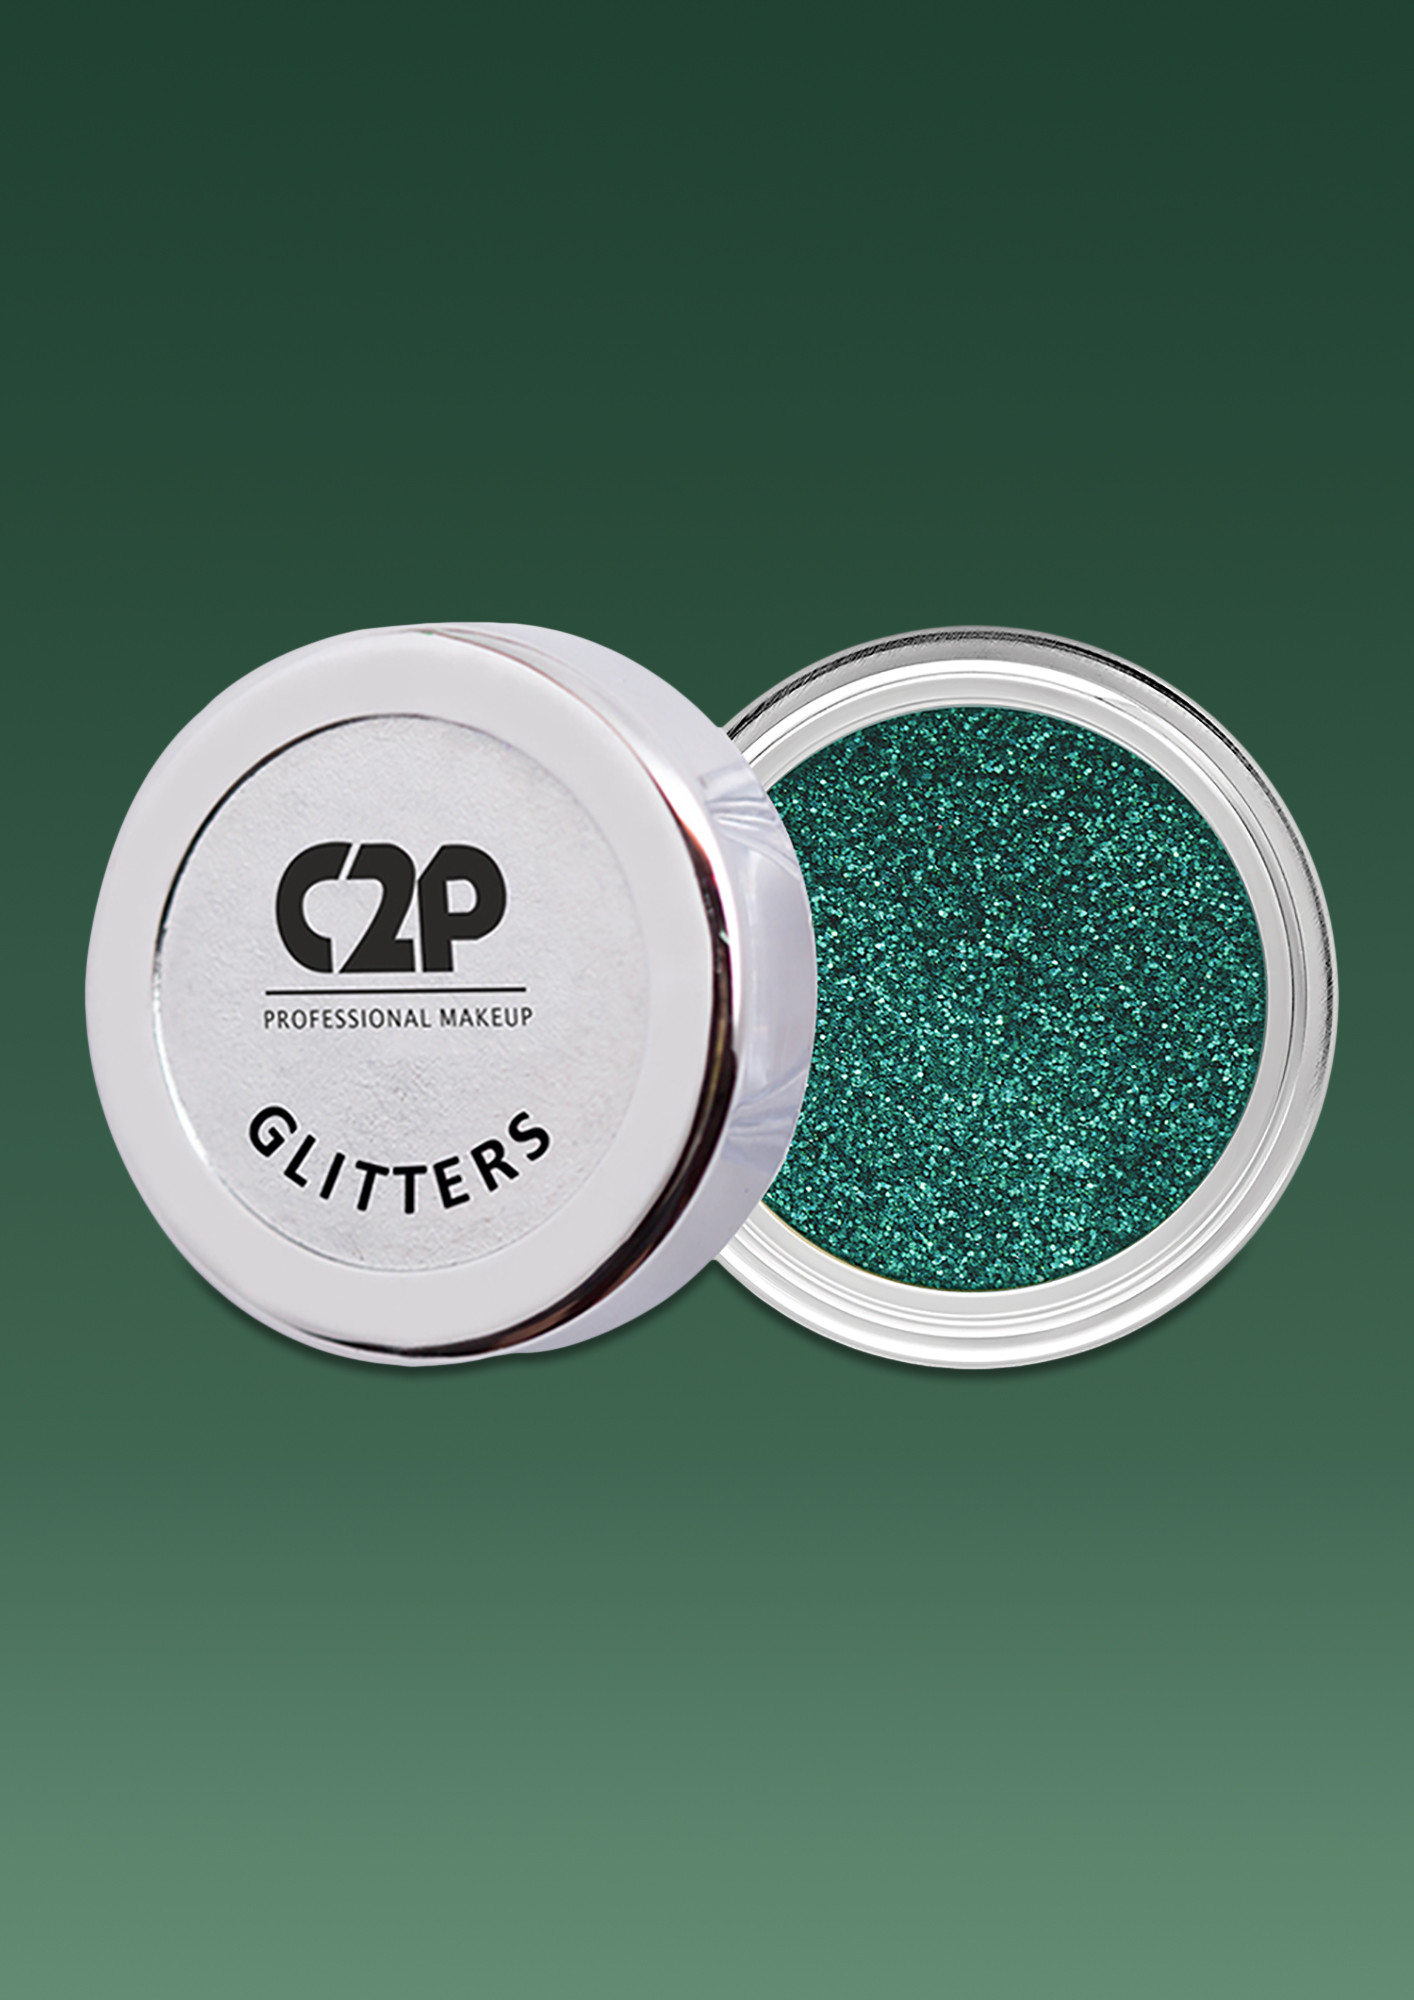 UPTOWN LOOSE GLITTERS (3 gm) - C2P Pro